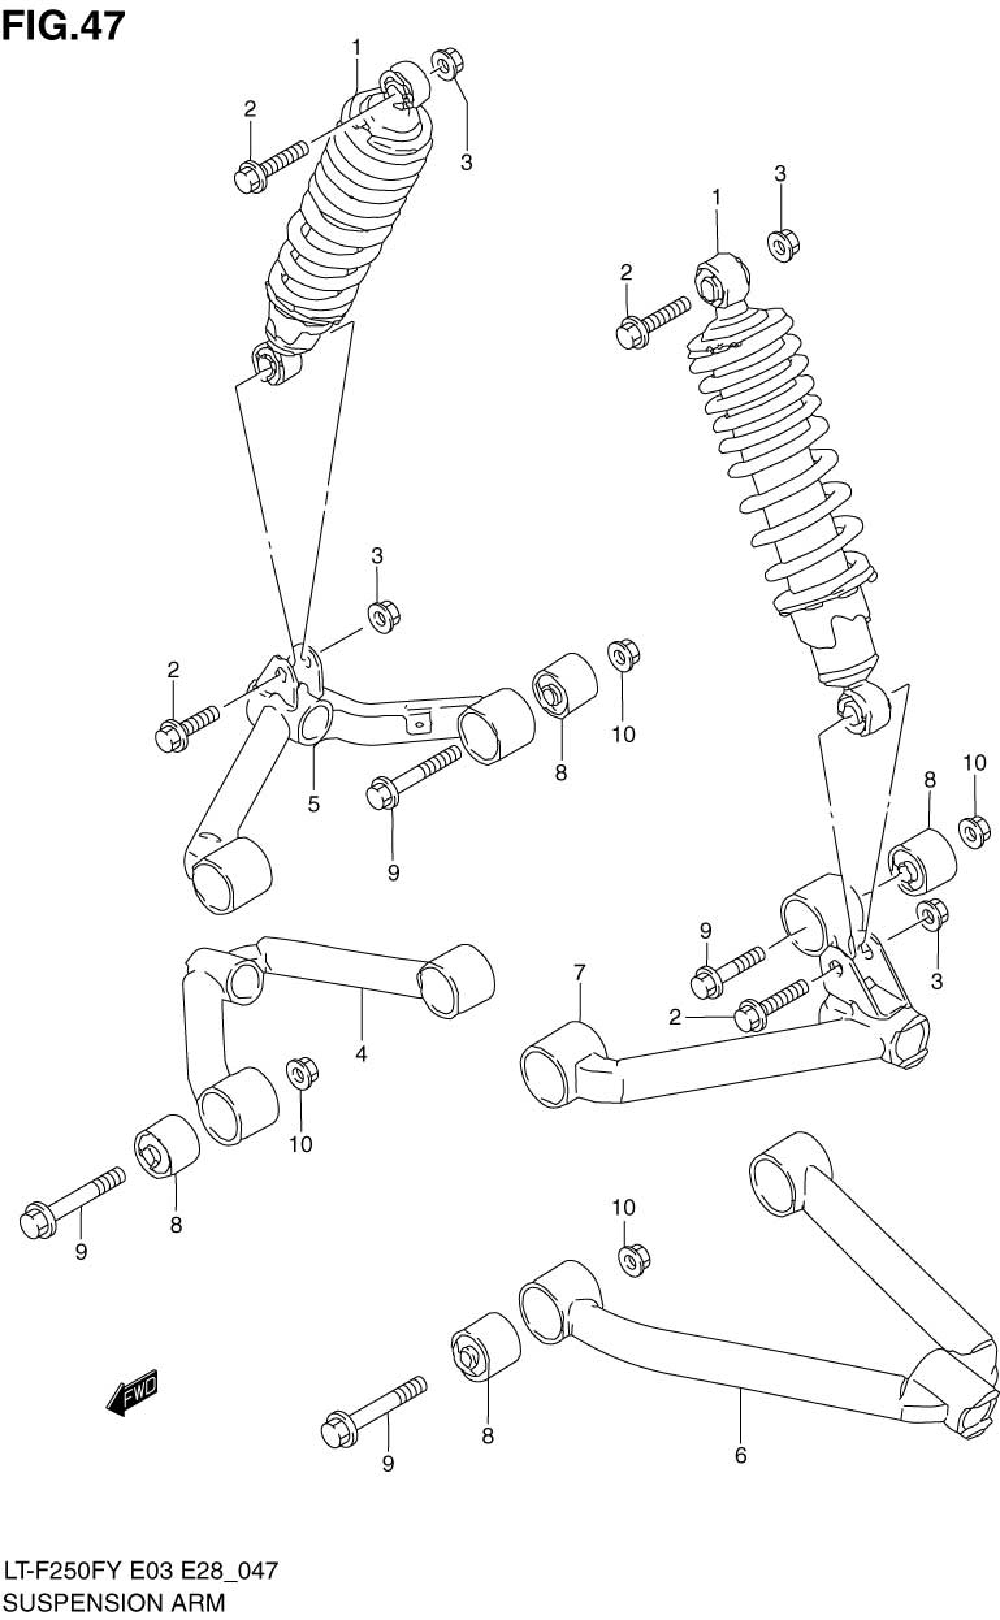 Front suspension arm